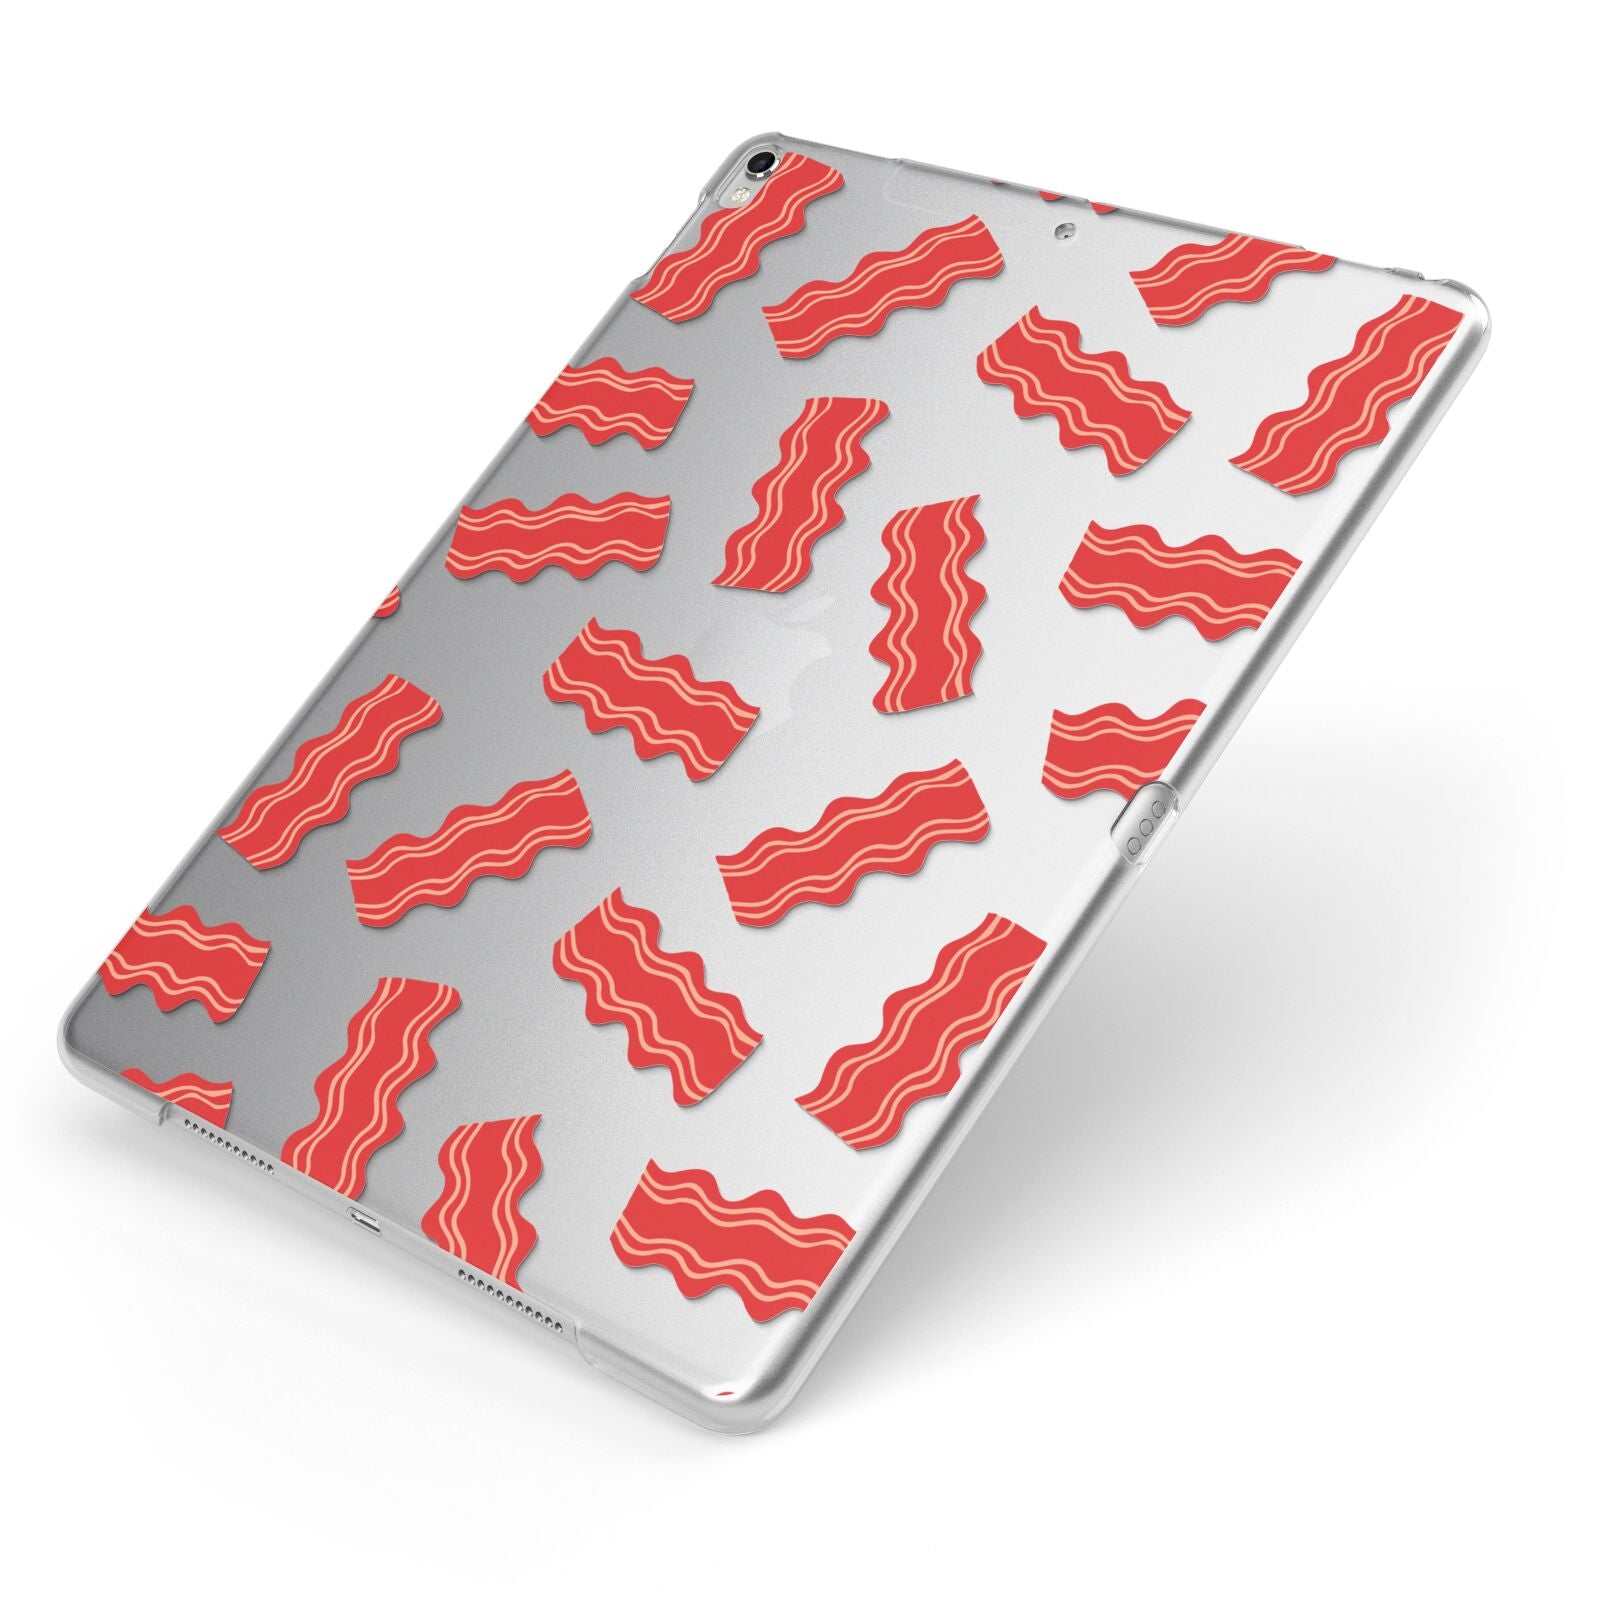 Bacon Apple iPad Case on Silver iPad Side View